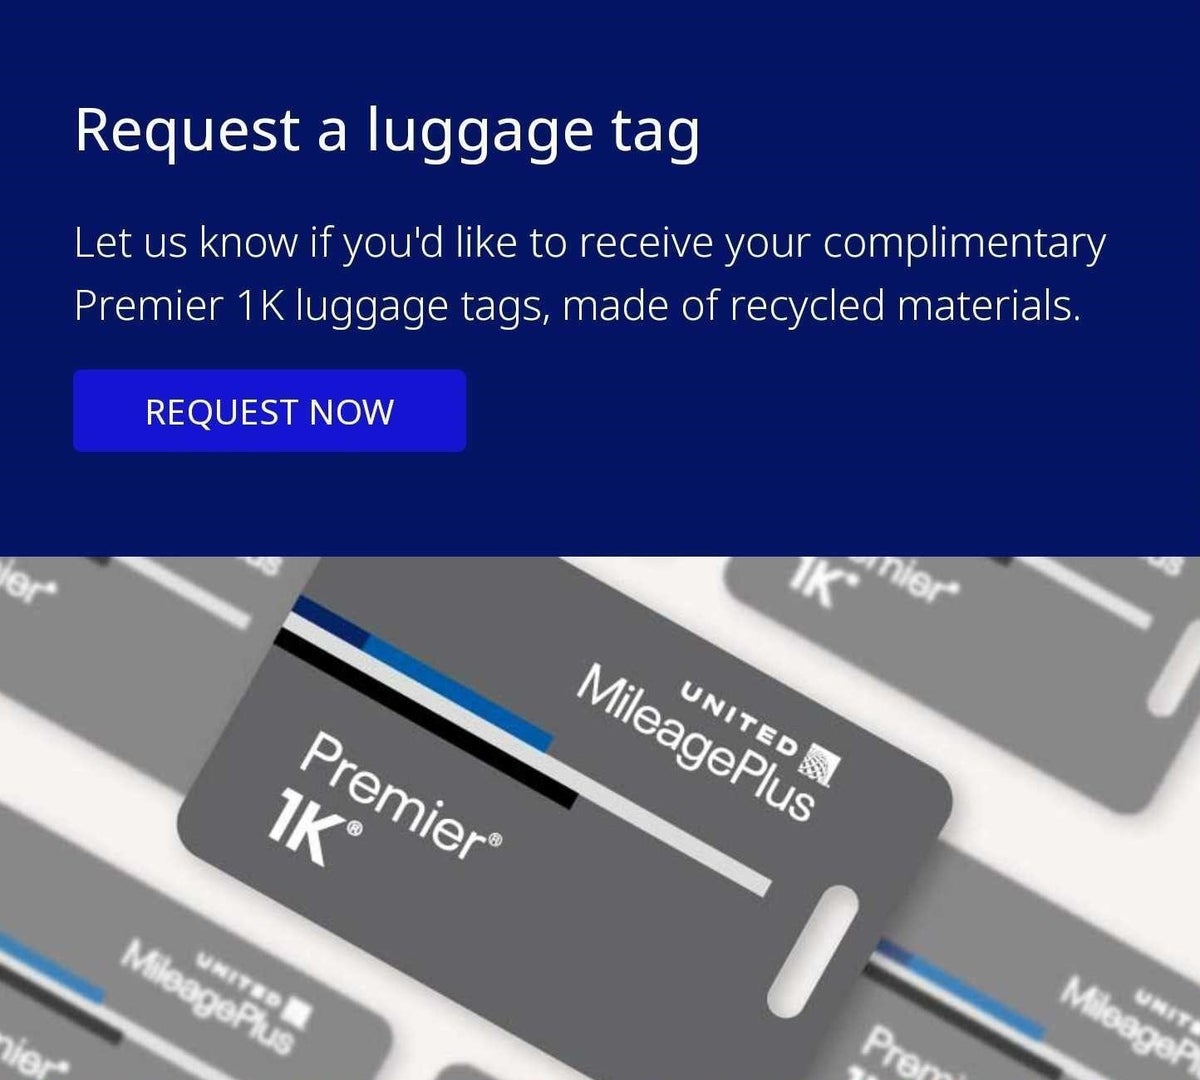 United MileagePlus Premier 1K luggage tag